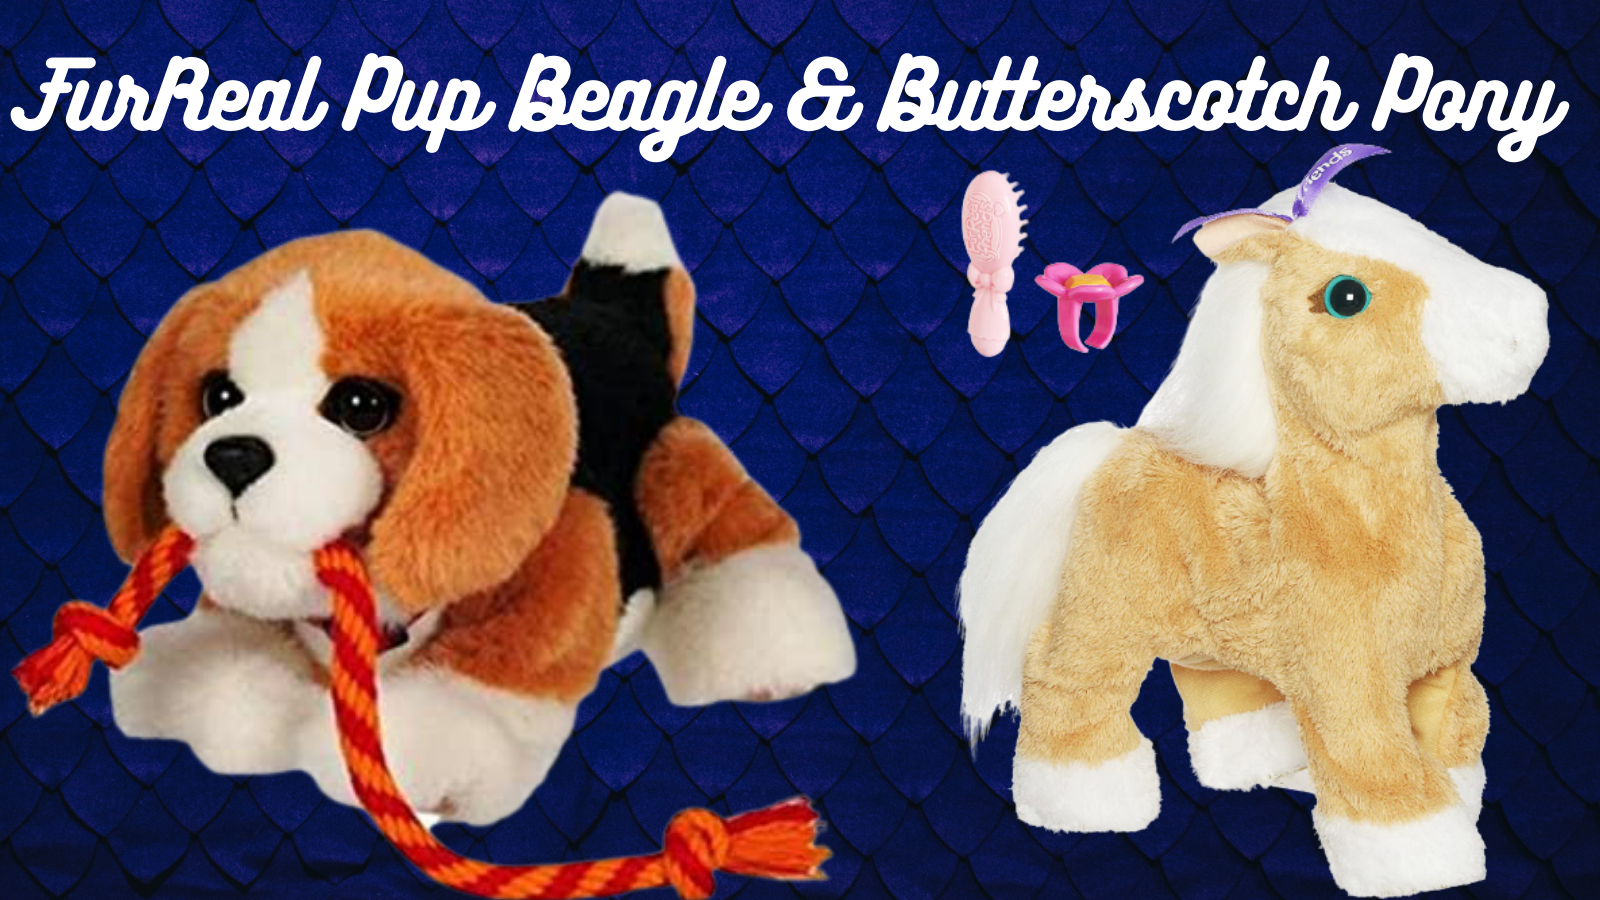 FurReal Pup Beagle & Butterscotch Pony.